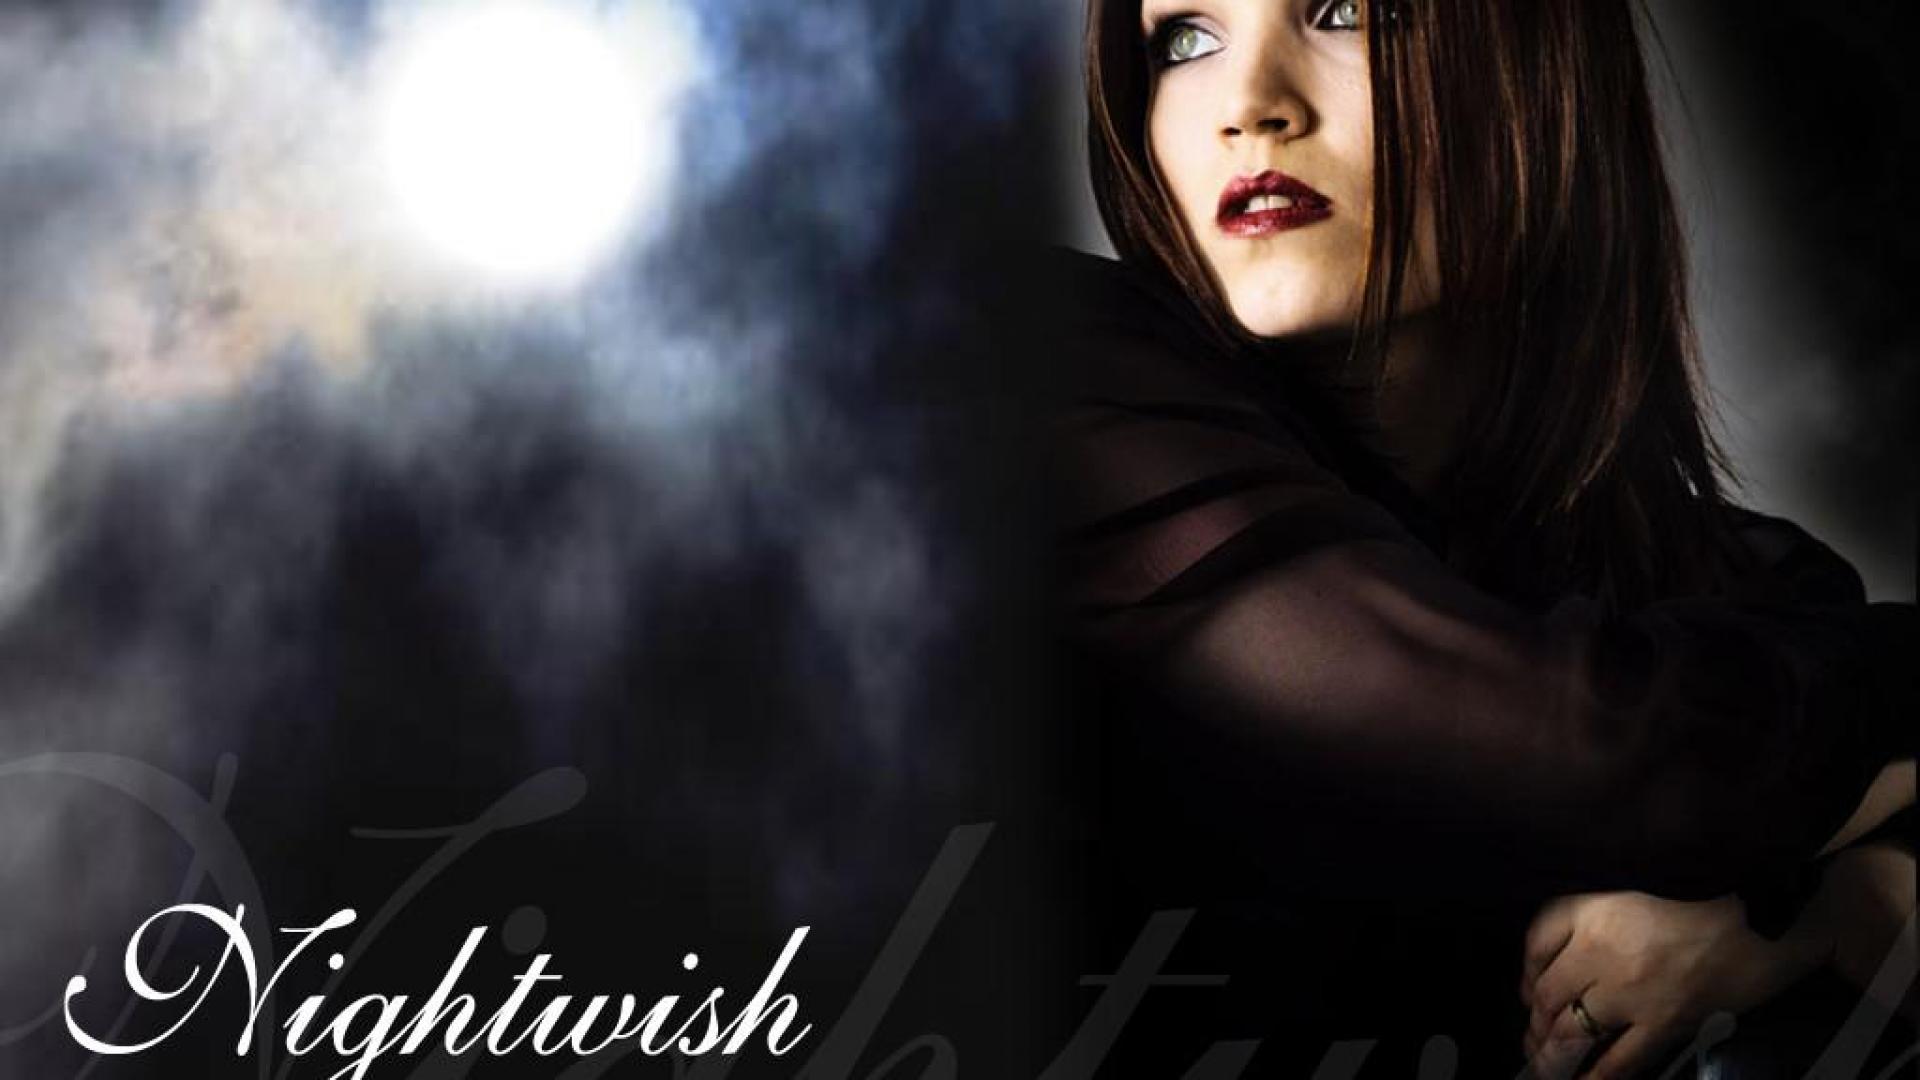 Nightwish Tarja Turunen High Quality And Resolution